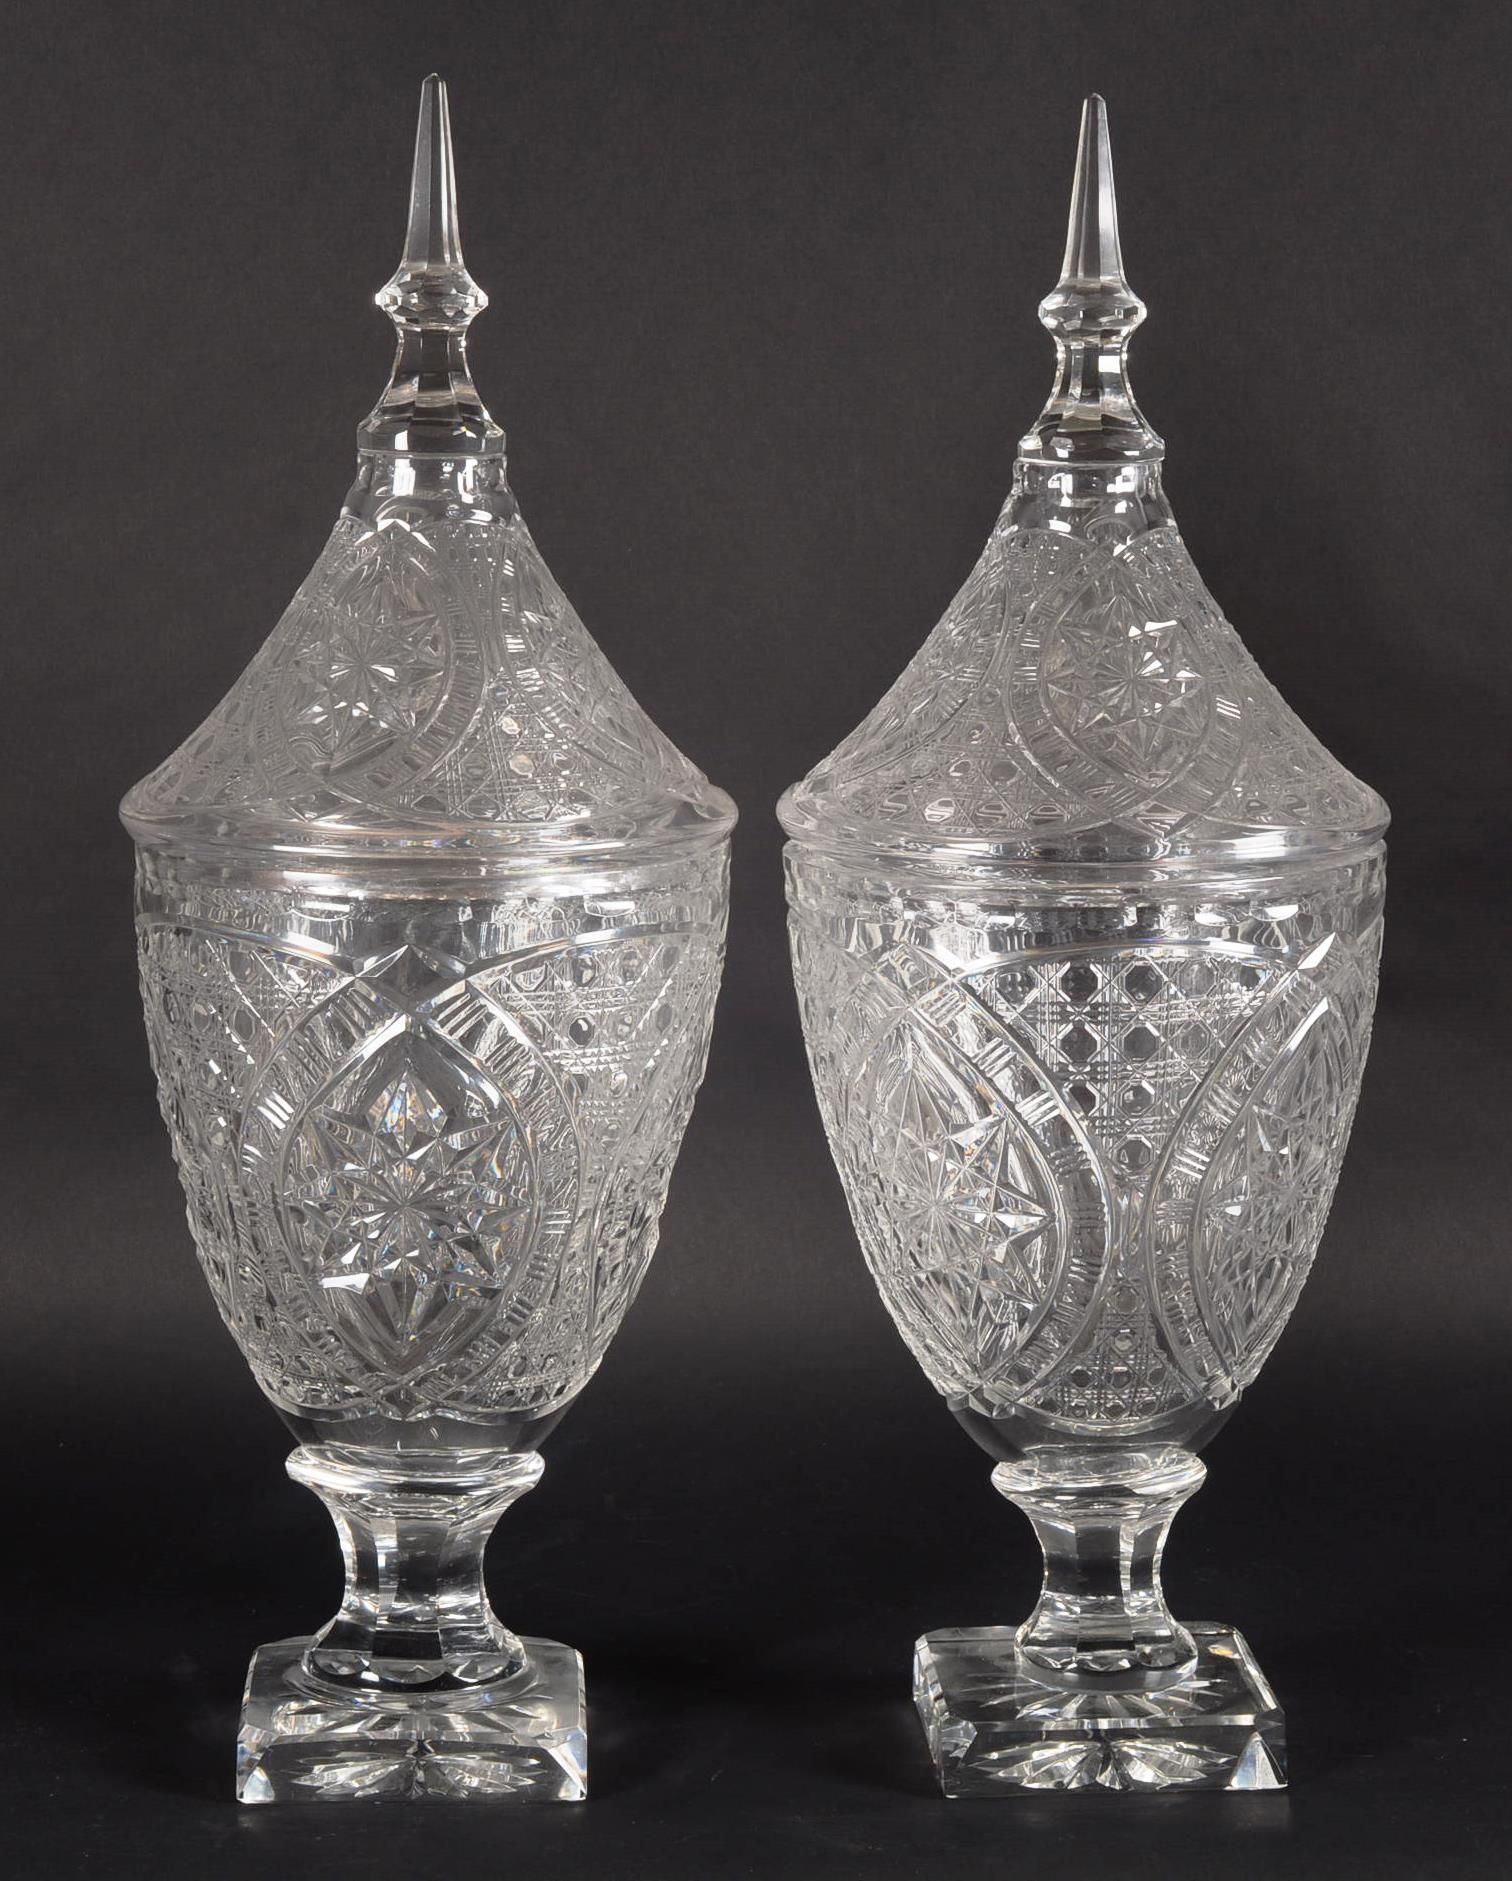 VSL Paire de vases couverts. VAL SAINT LAMBERT

Superb pair of covered vases in &hellip;